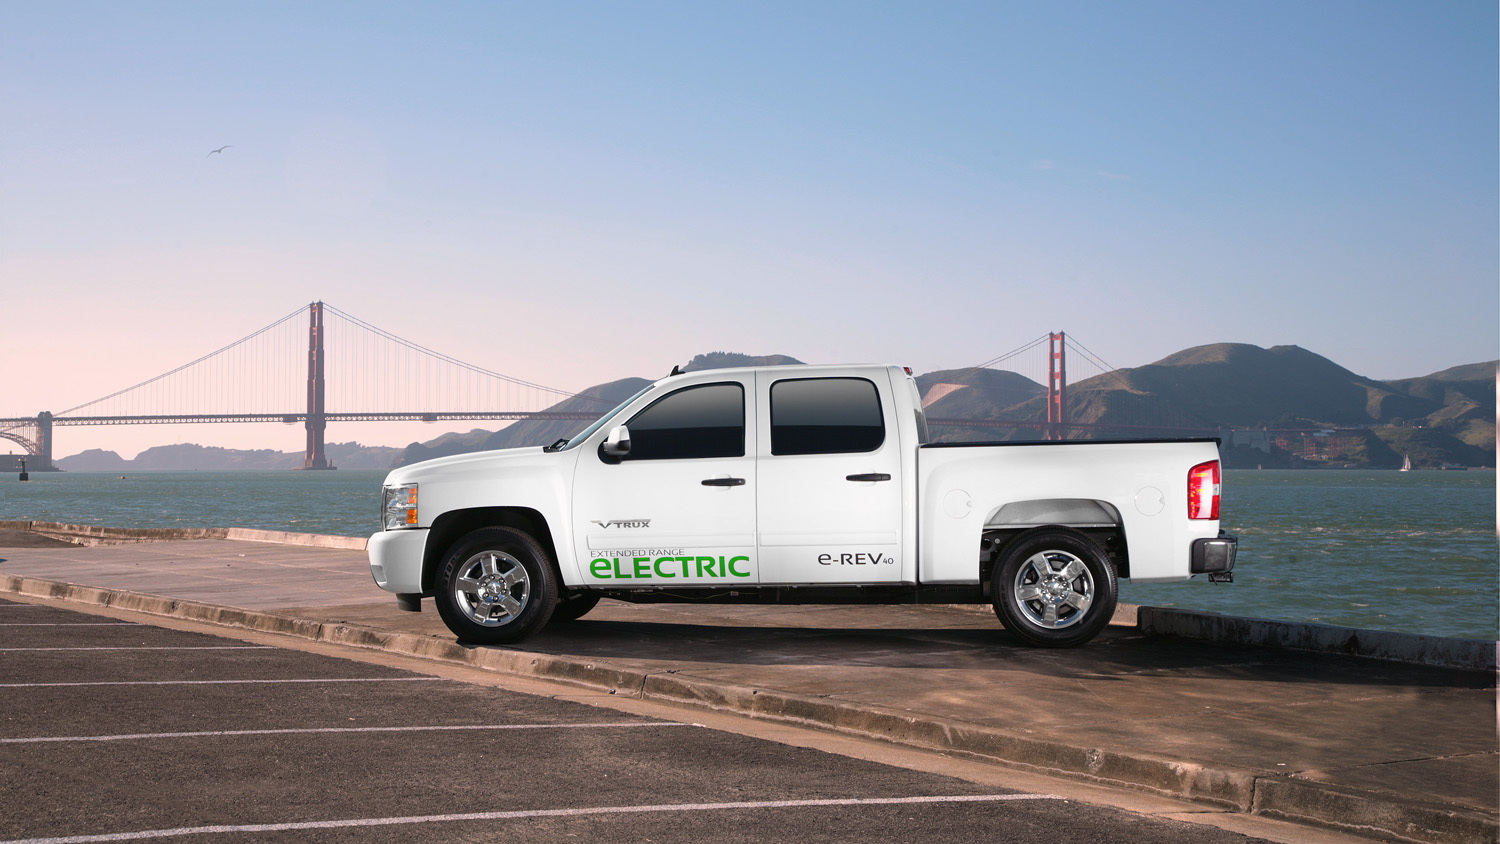 Via eREV range-extended electric pickup